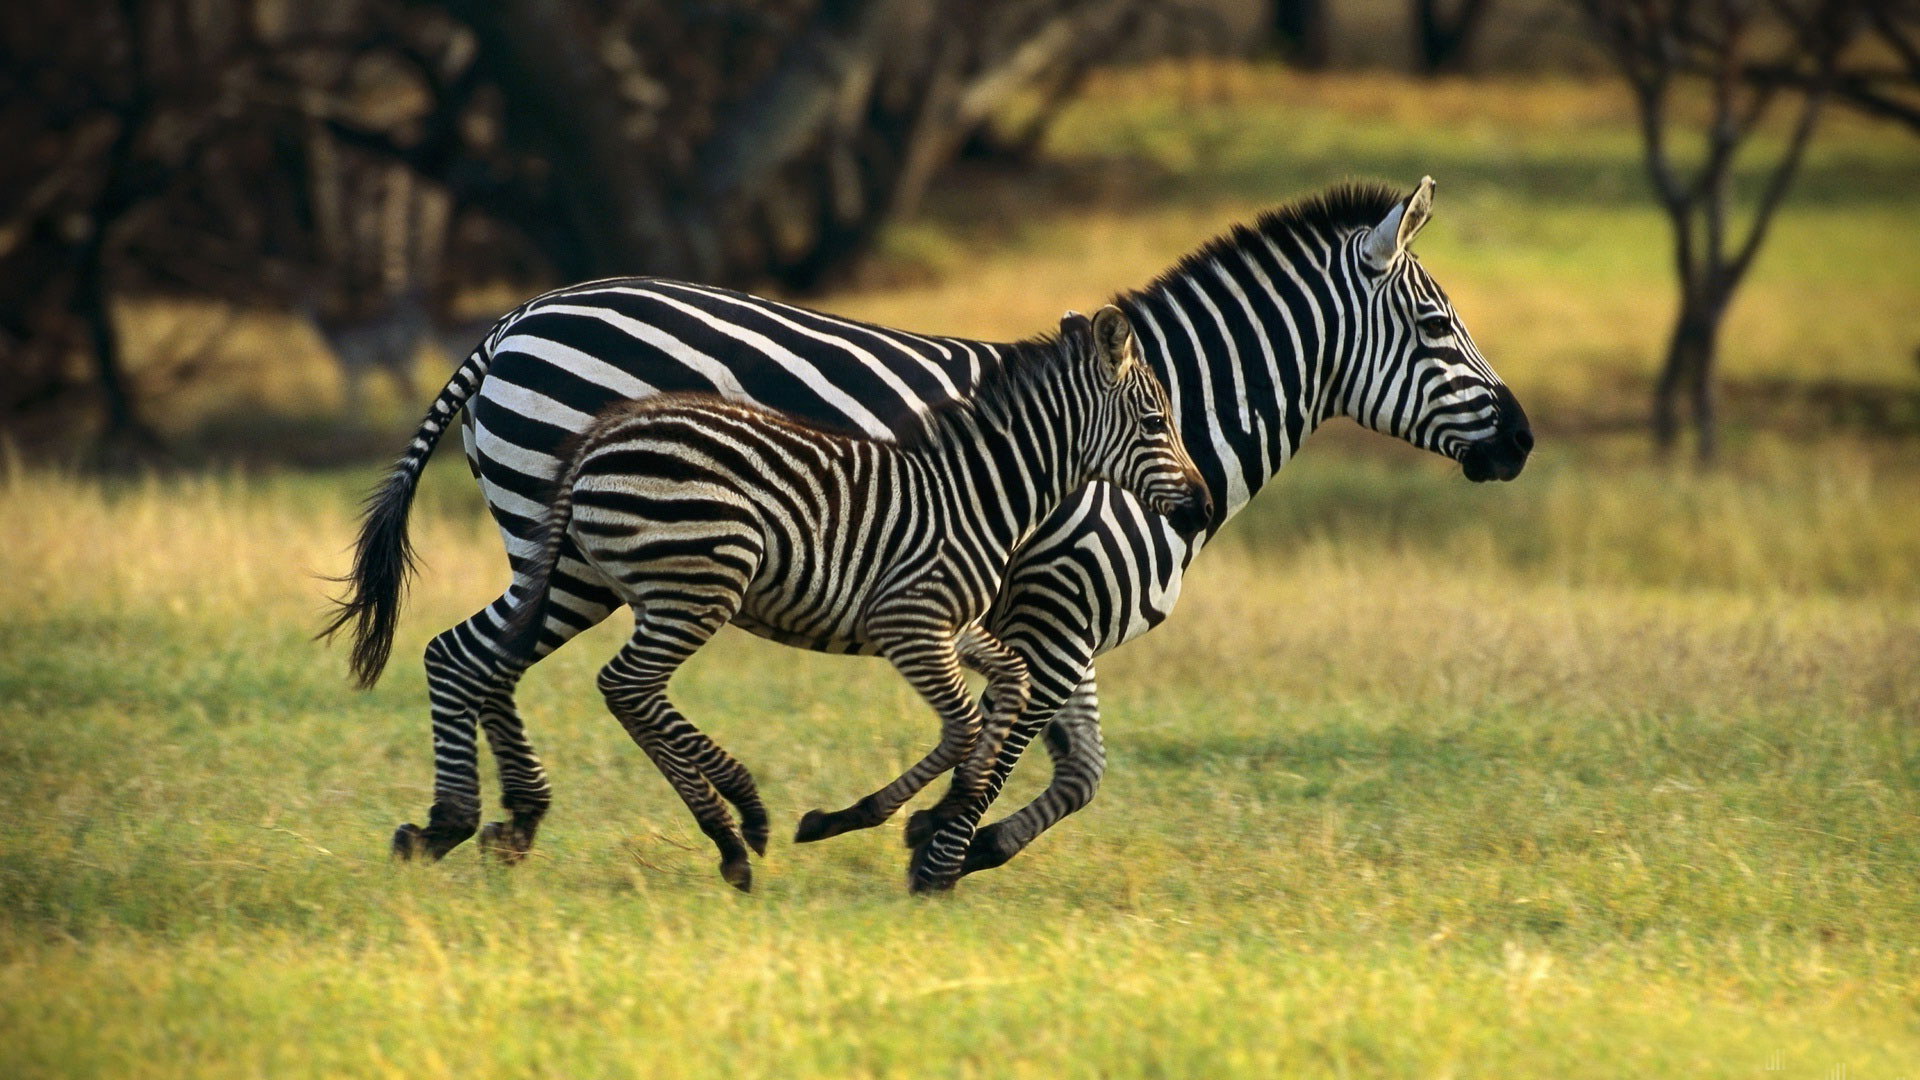 Zebra ane mwana